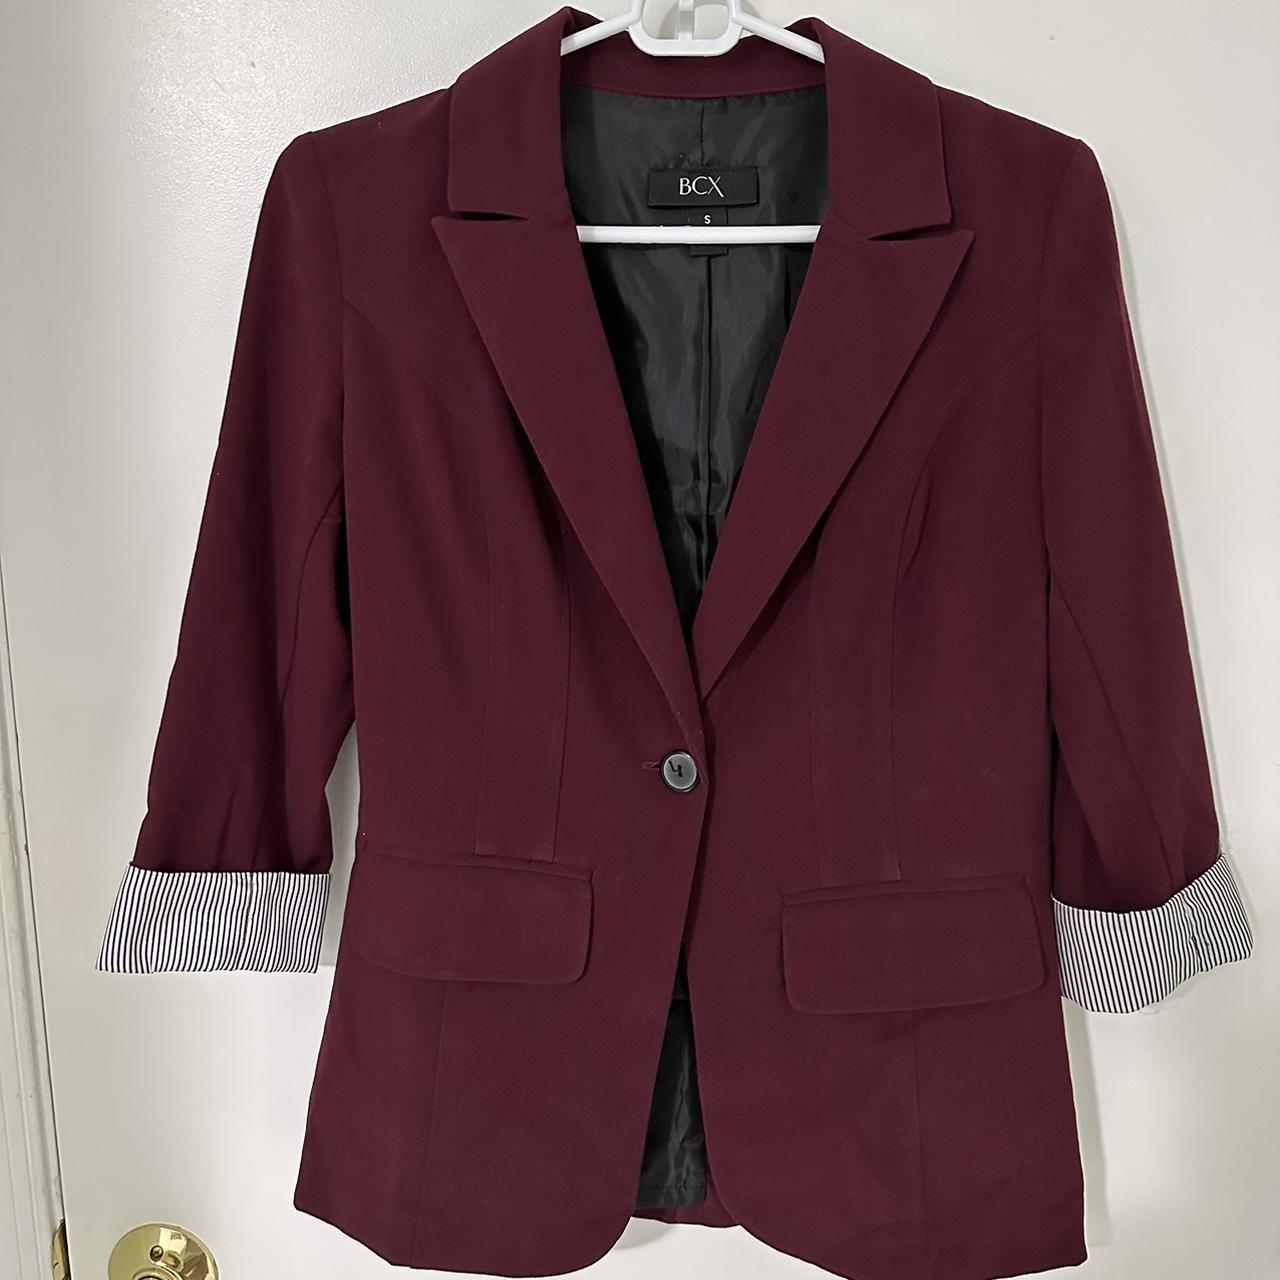 burgundy suit jacket - Depop